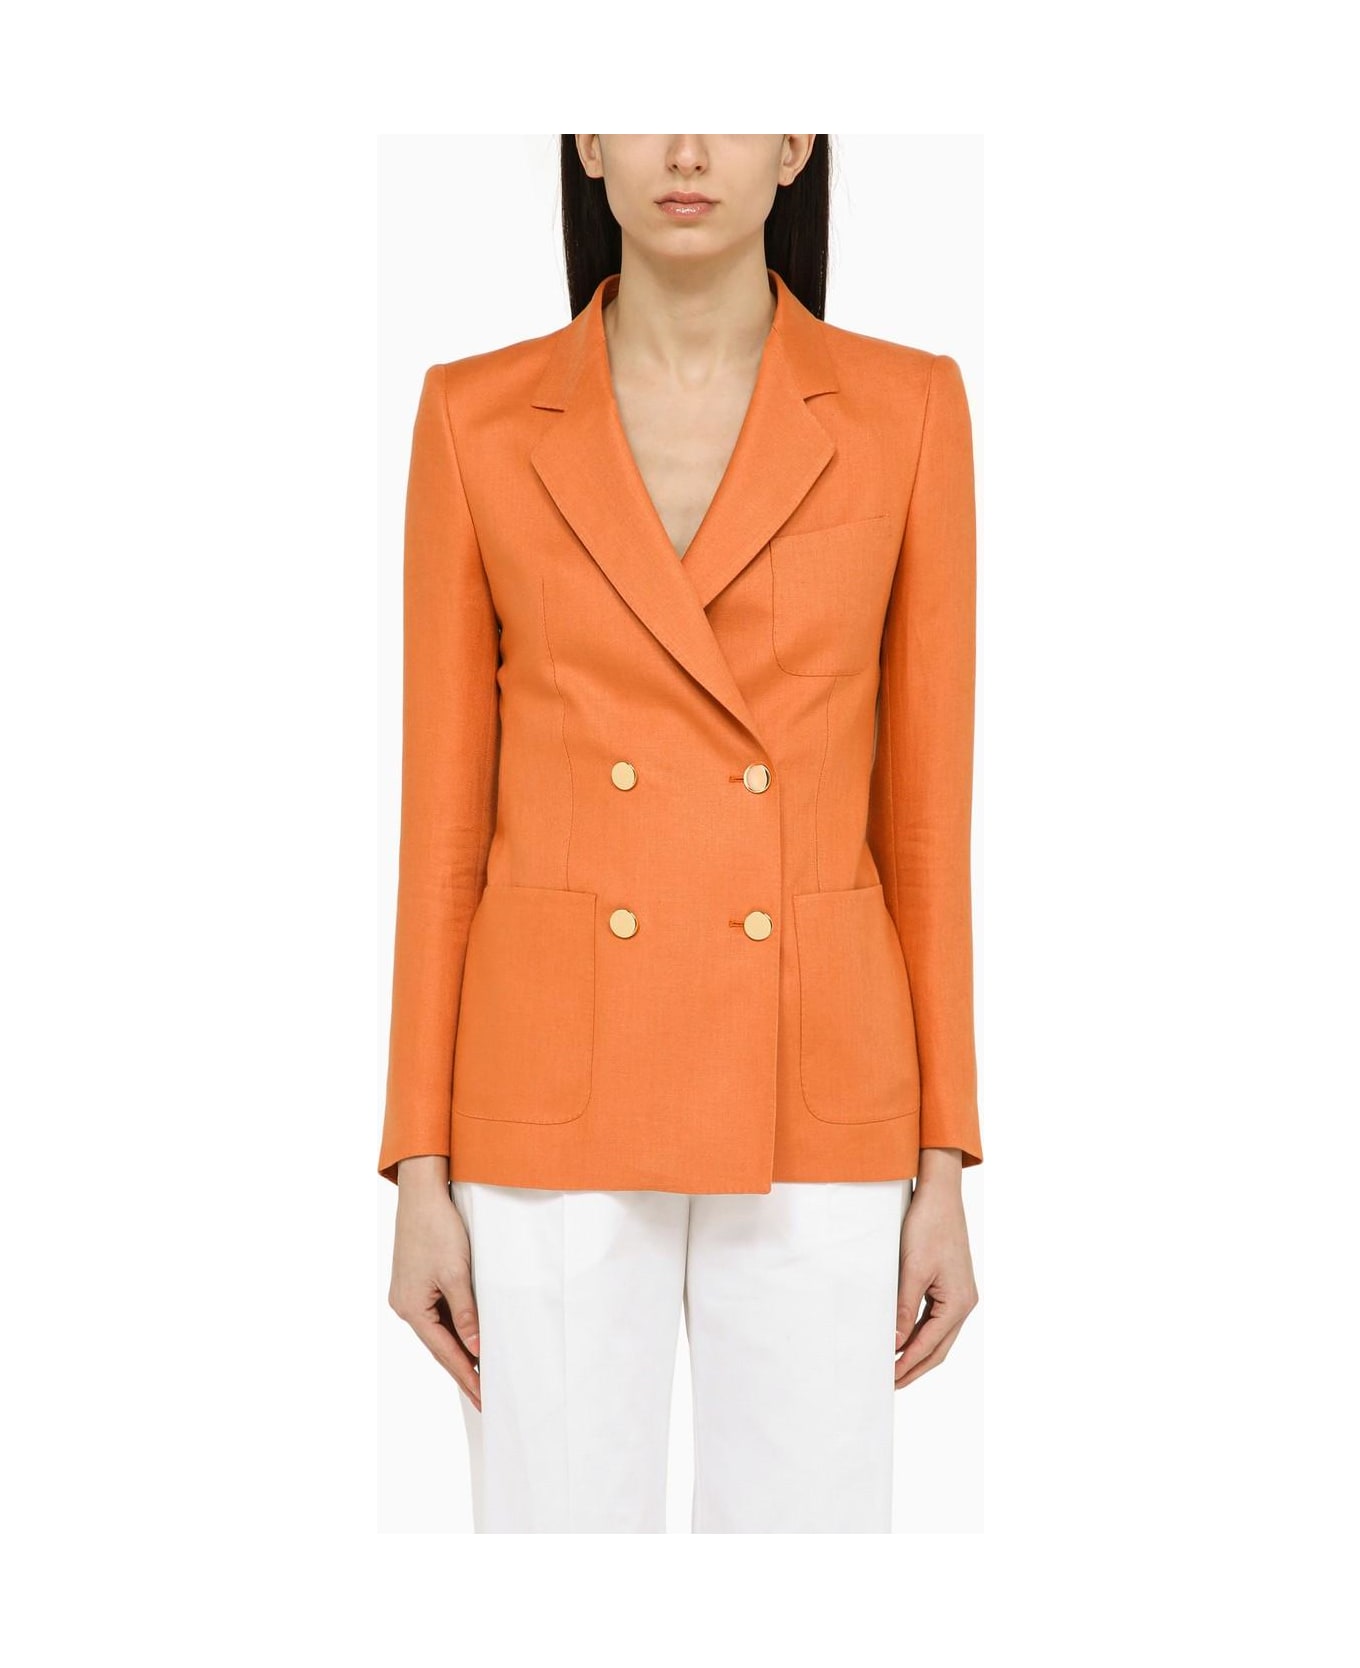 Tagliatore Orange Linen Double-breasted Jacket - Orange